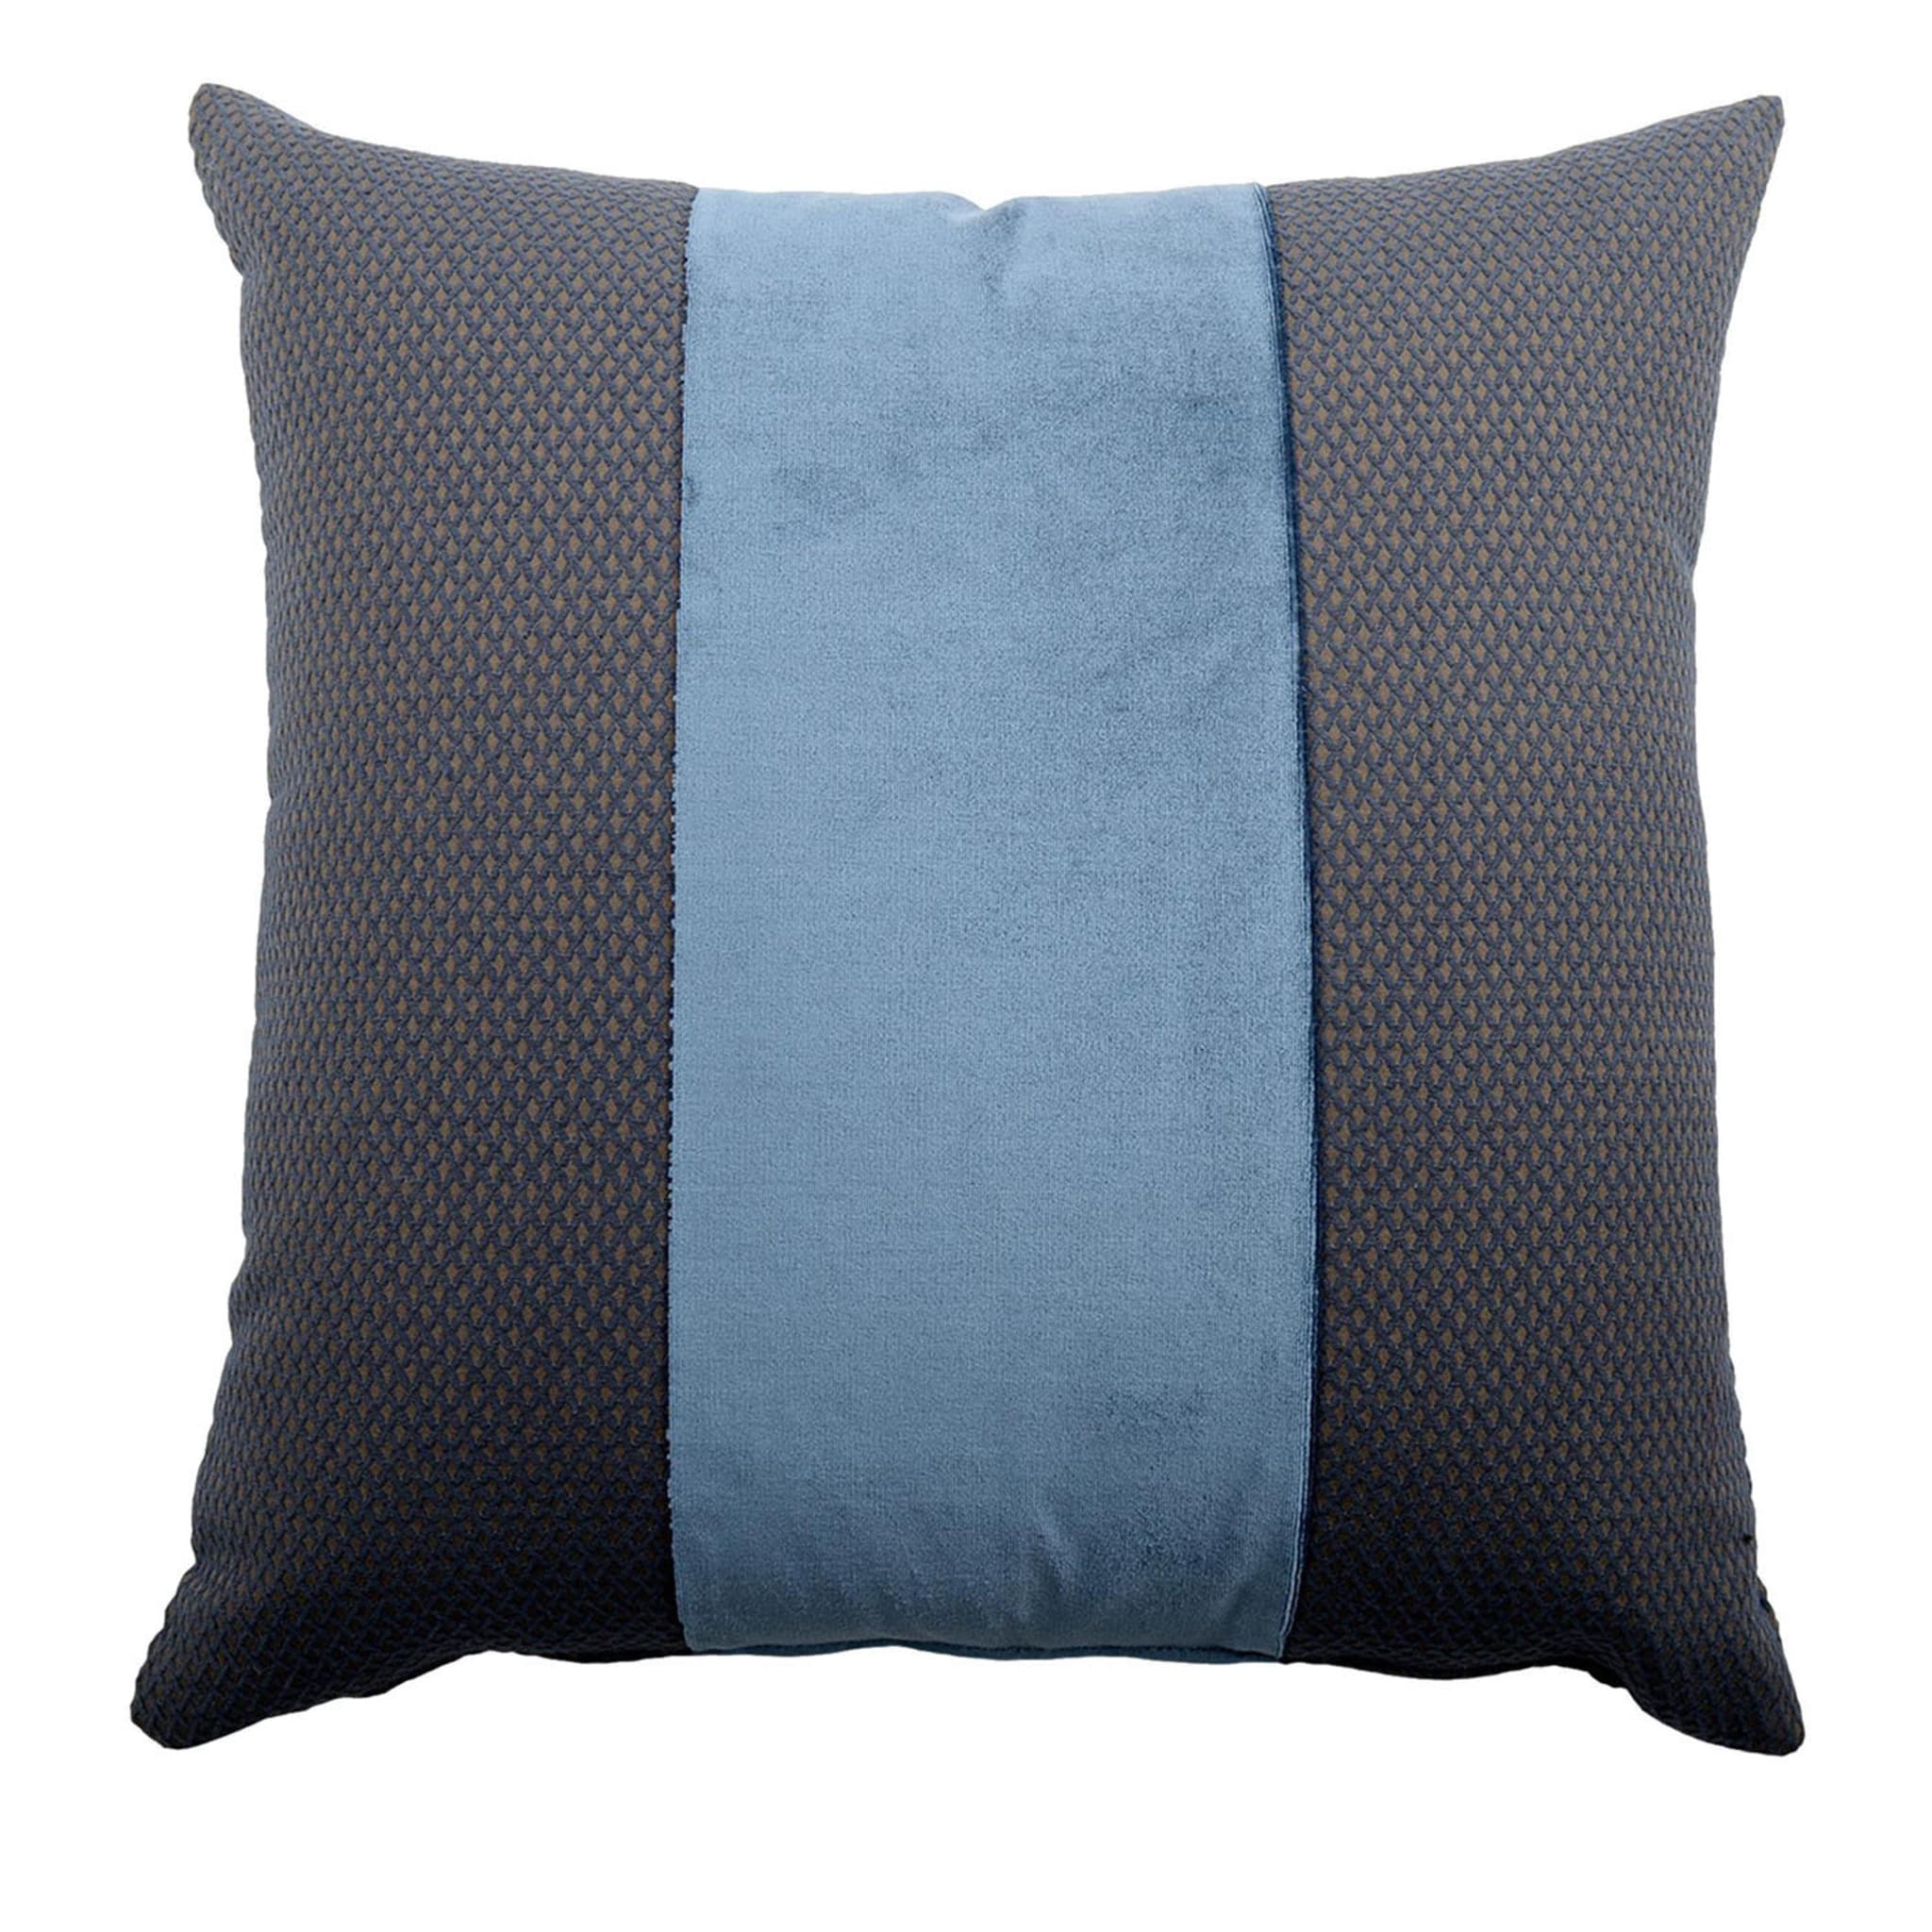 Carrè Degradè Jacquard Cushion with Light Blue Band - Main view